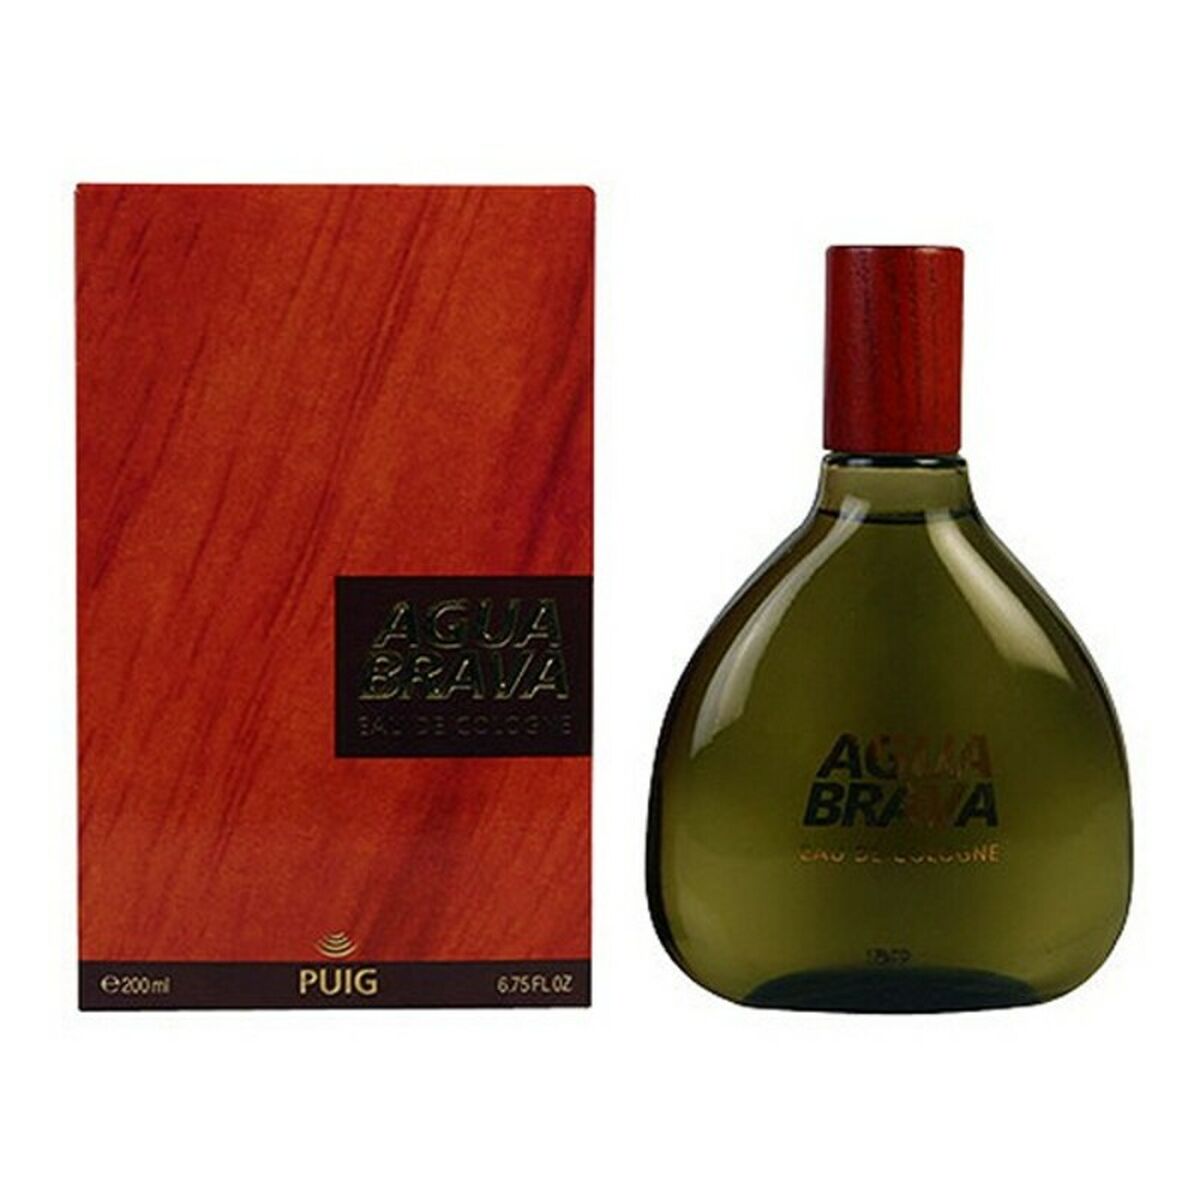 Men's Perfume Agua Brava Puig EDC-0